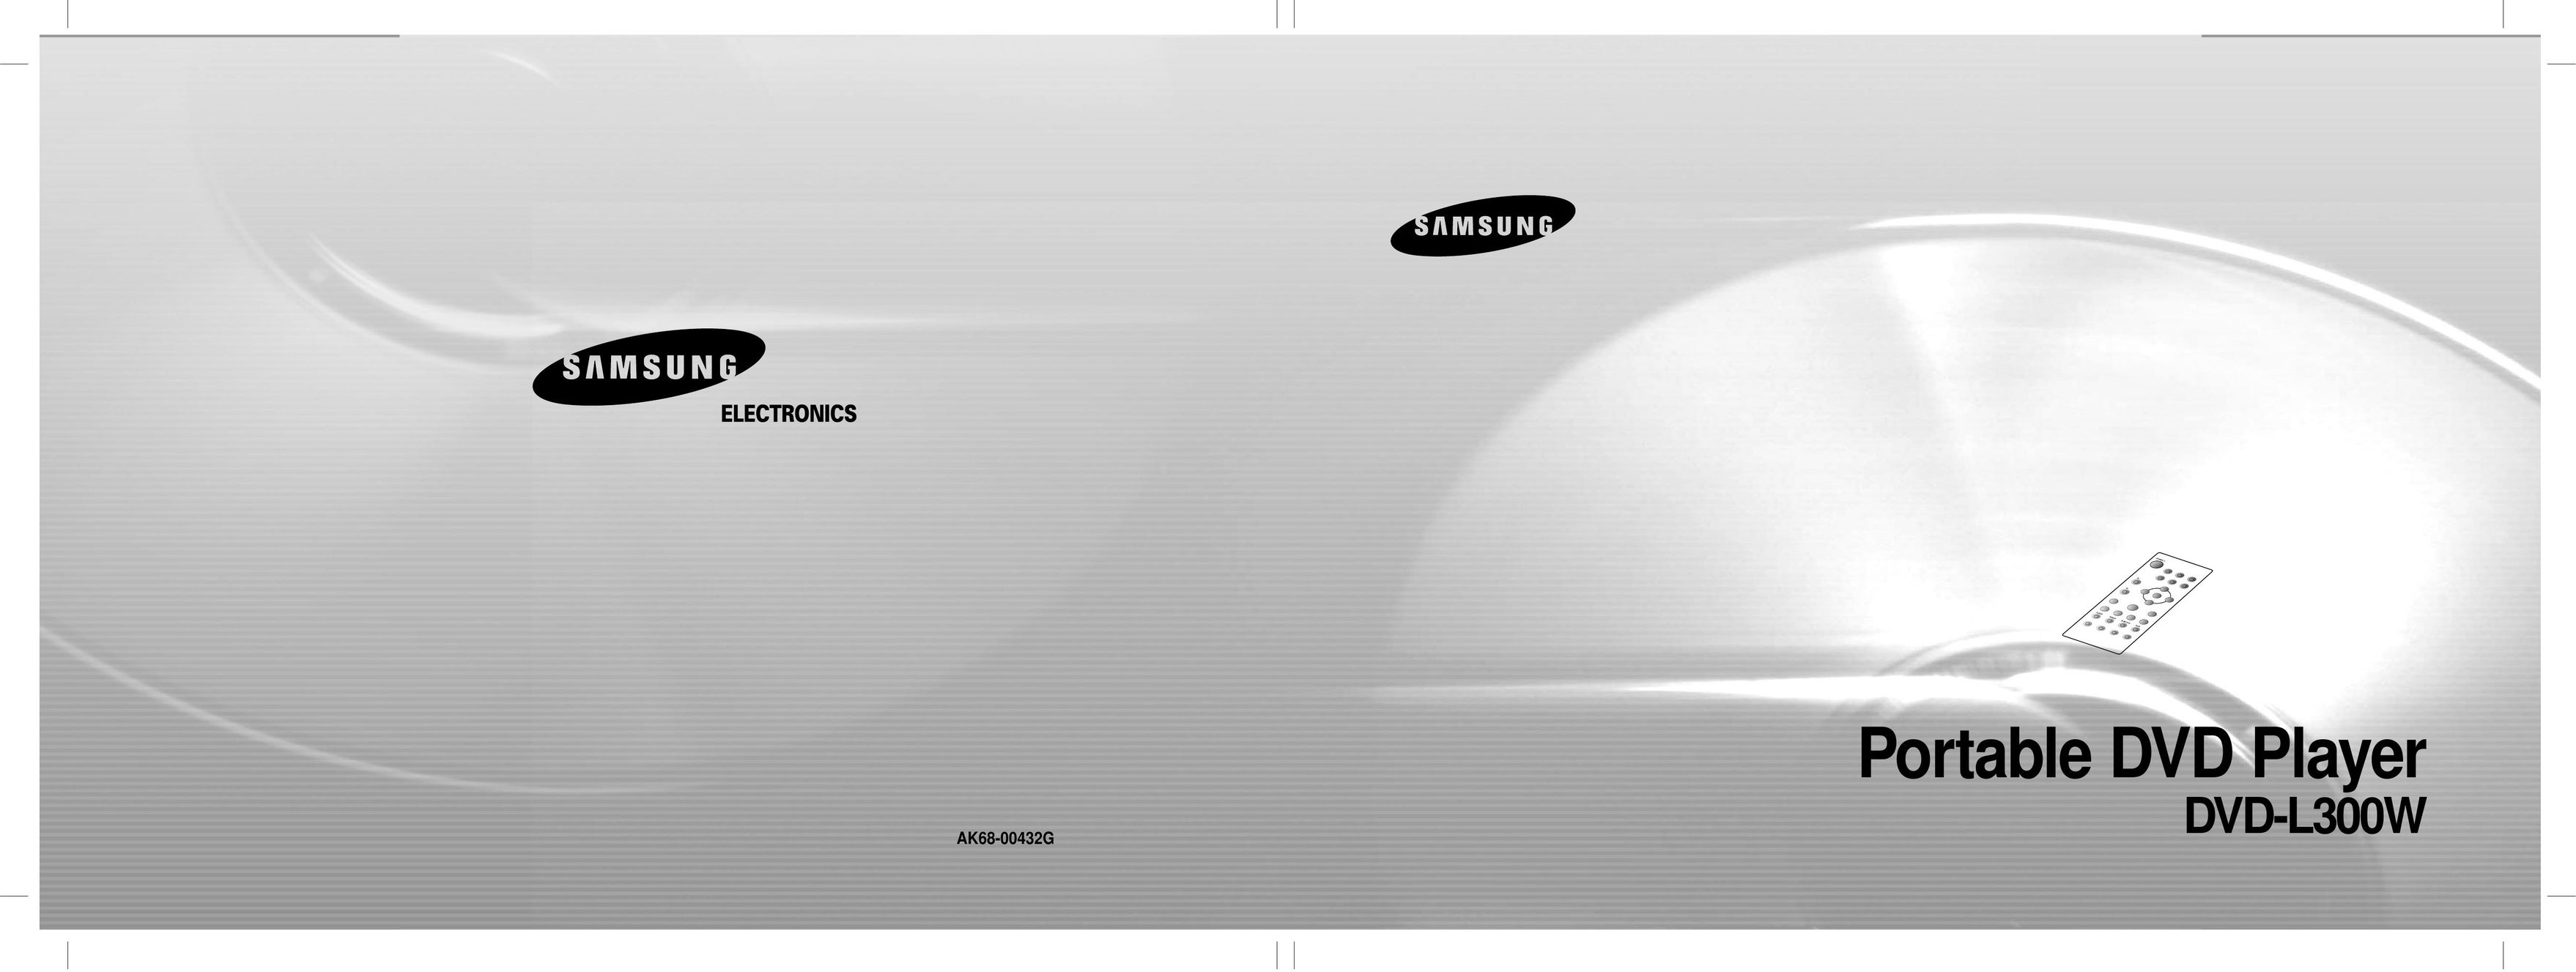 Samsung DVD-L300W Portable DVD Player User Manual